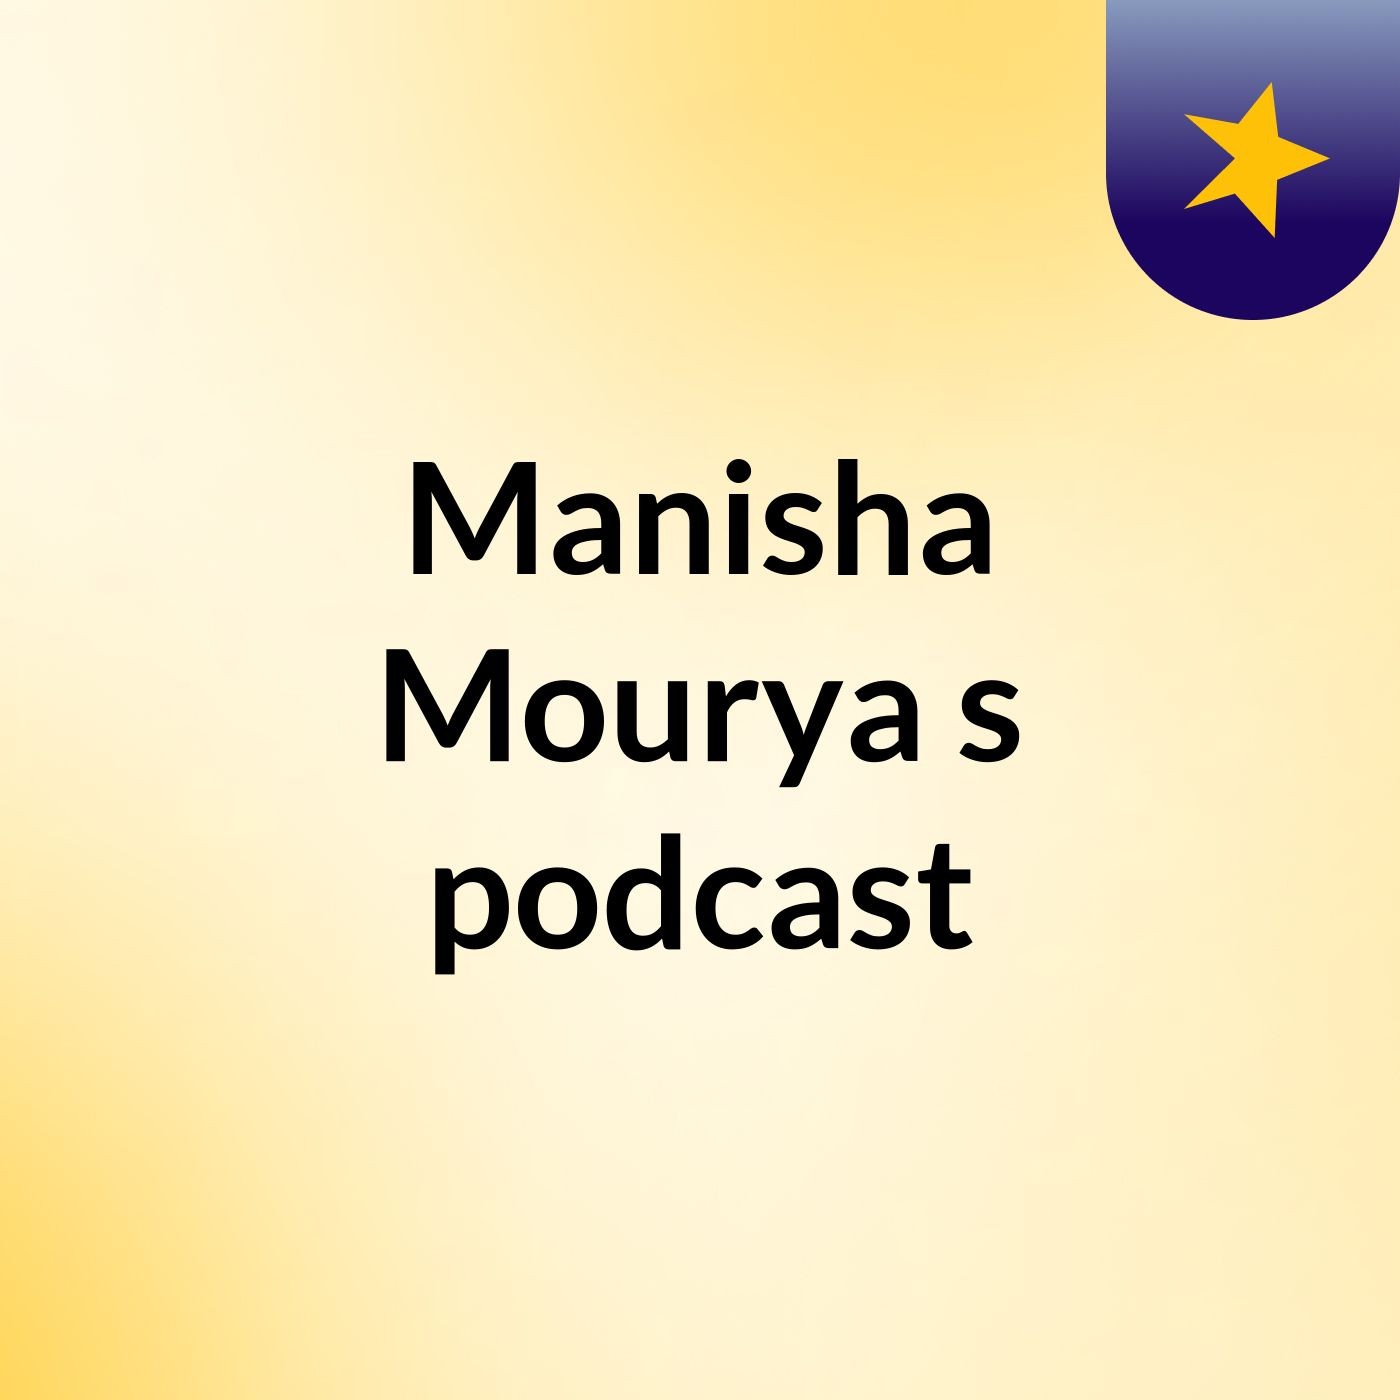 Manisha Mourya's podcast